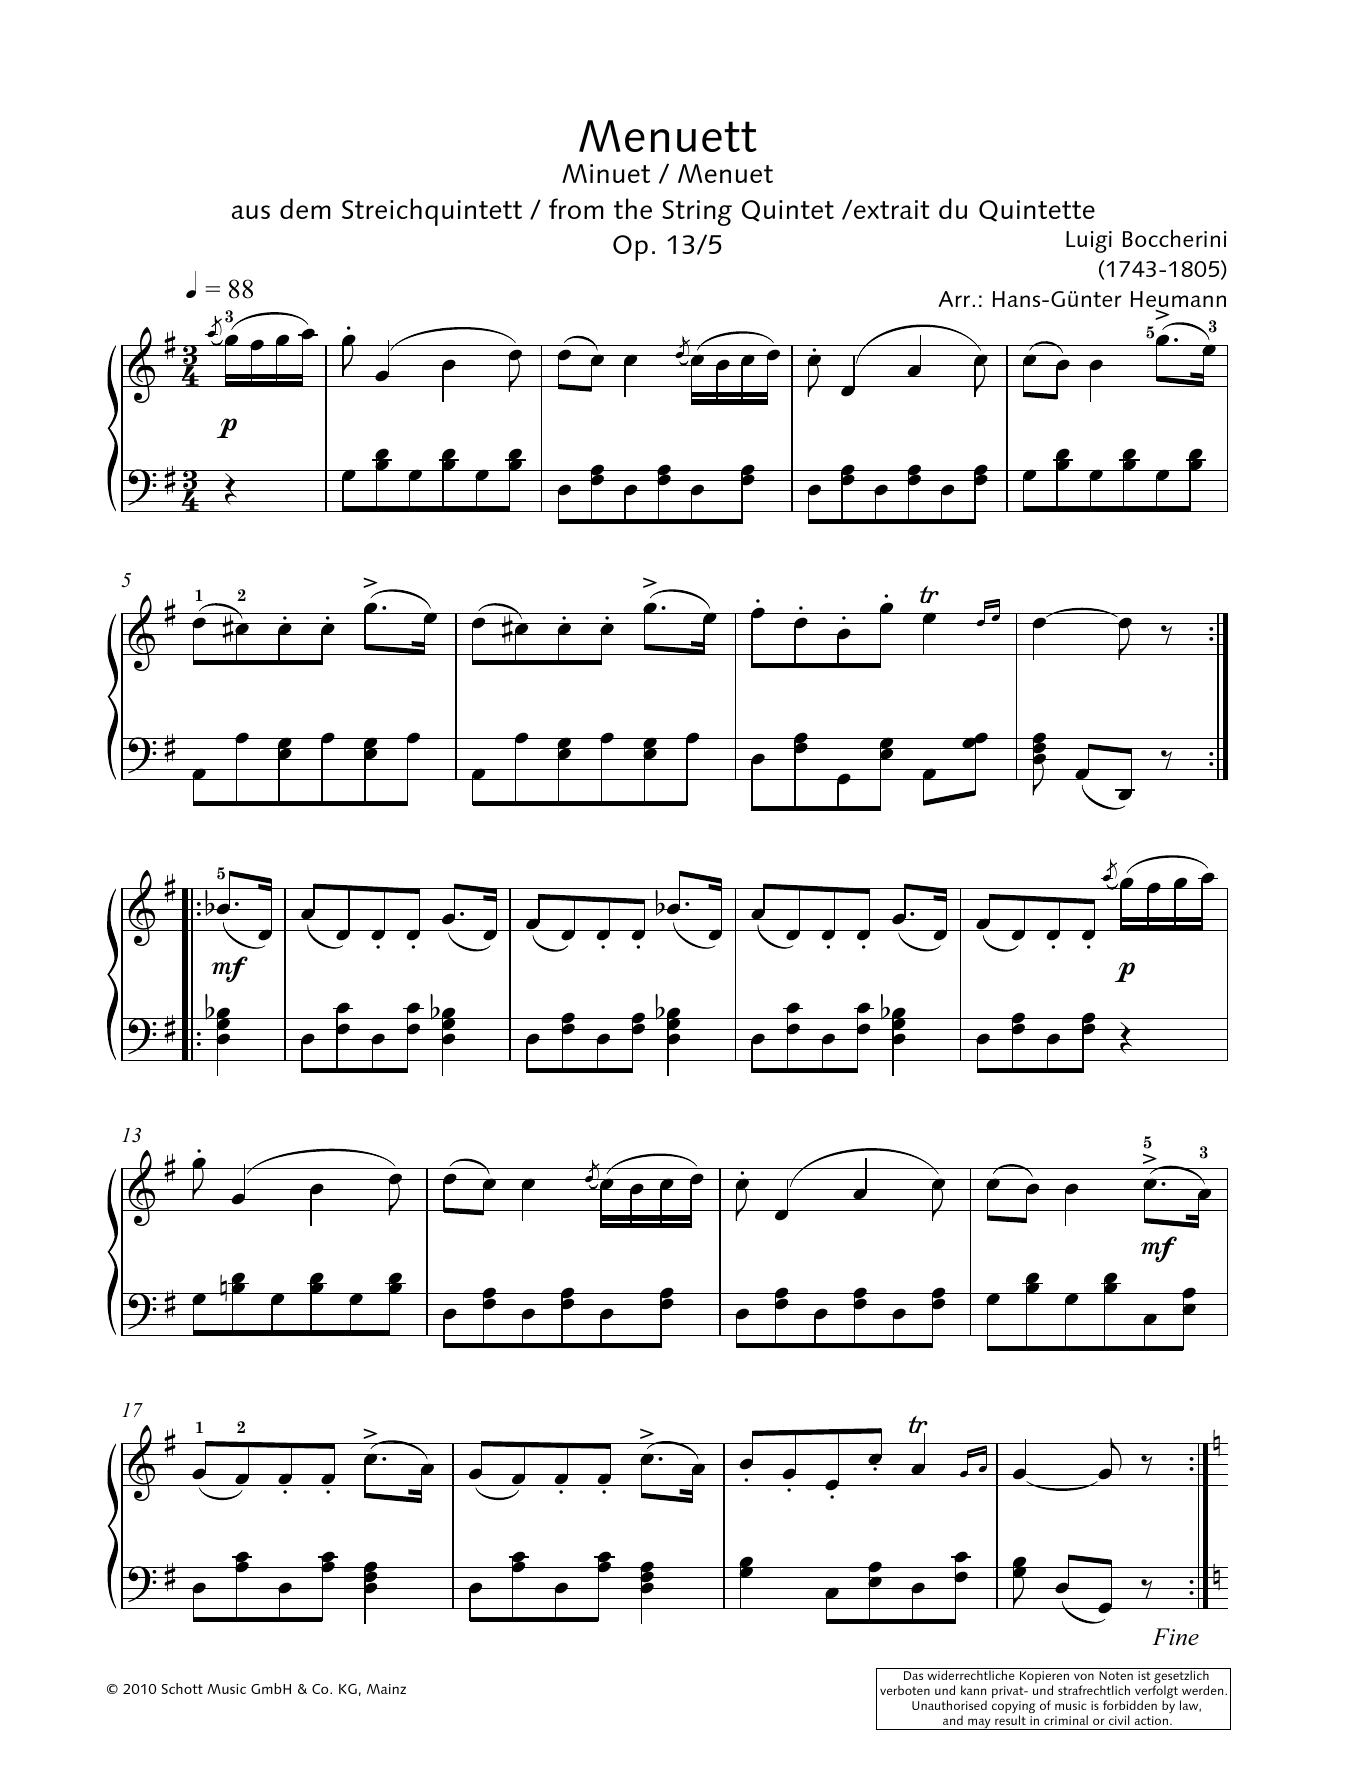 Hans-Gunter Heumann Minuet Sheet Music Notes & Chords for Piano Solo - Download or Print PDF